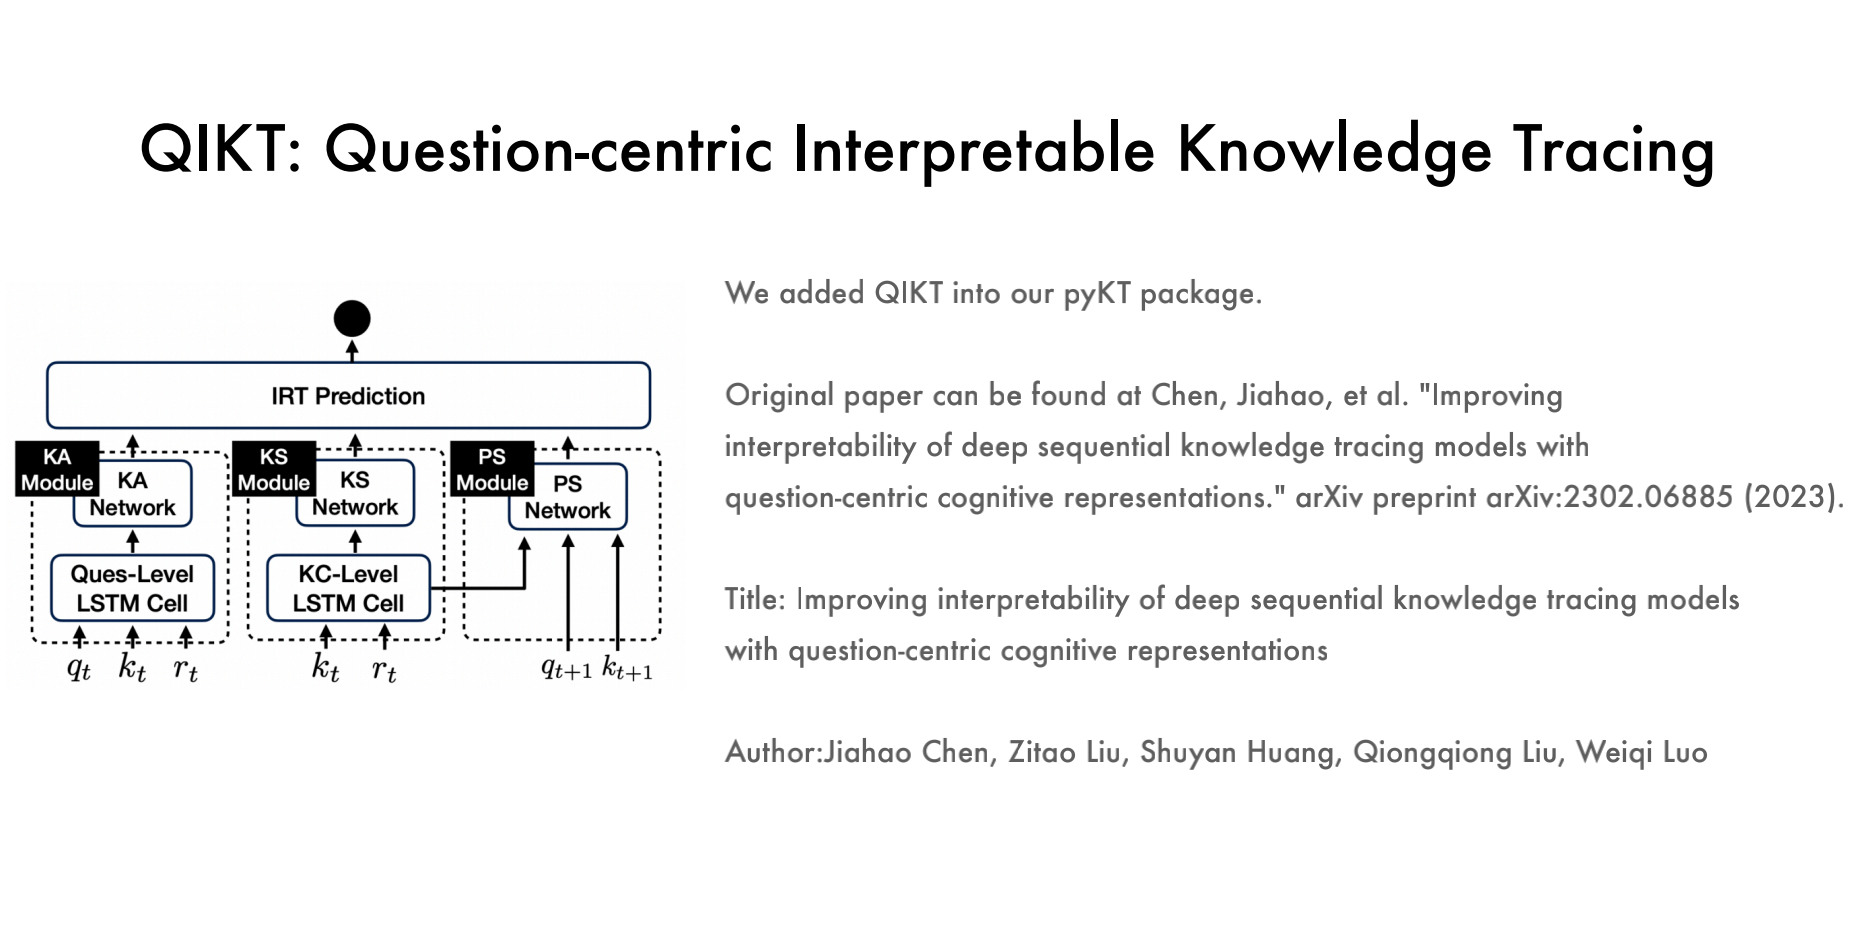 QIKT: Question-centric Interpretable Knowledge Tracing